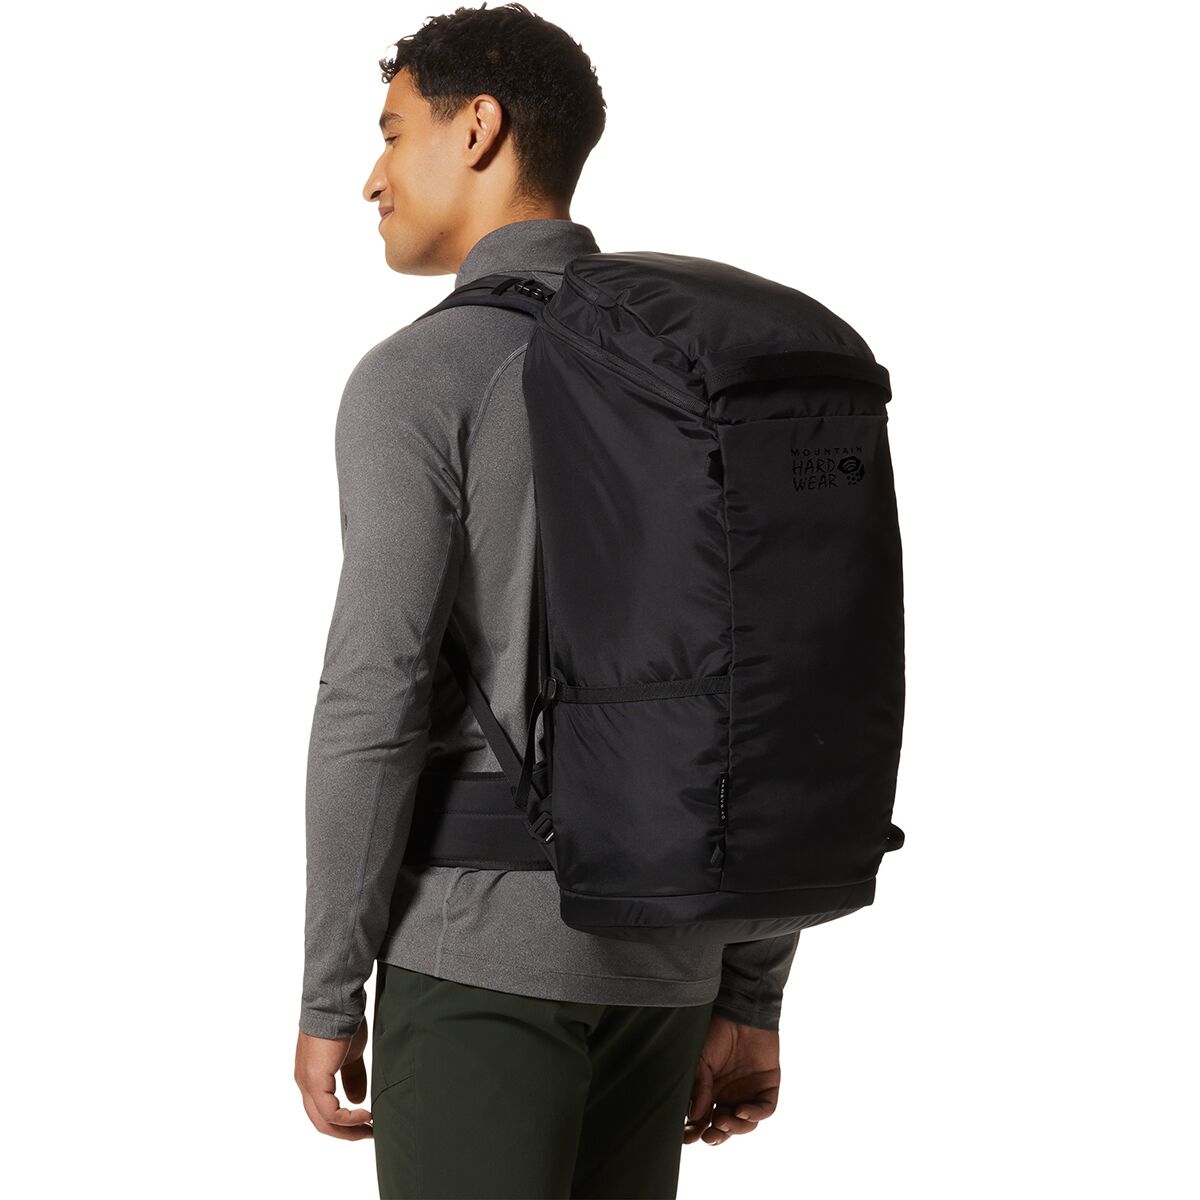 Mountain Hardwear Redeye 45L Travel Pack - Travel